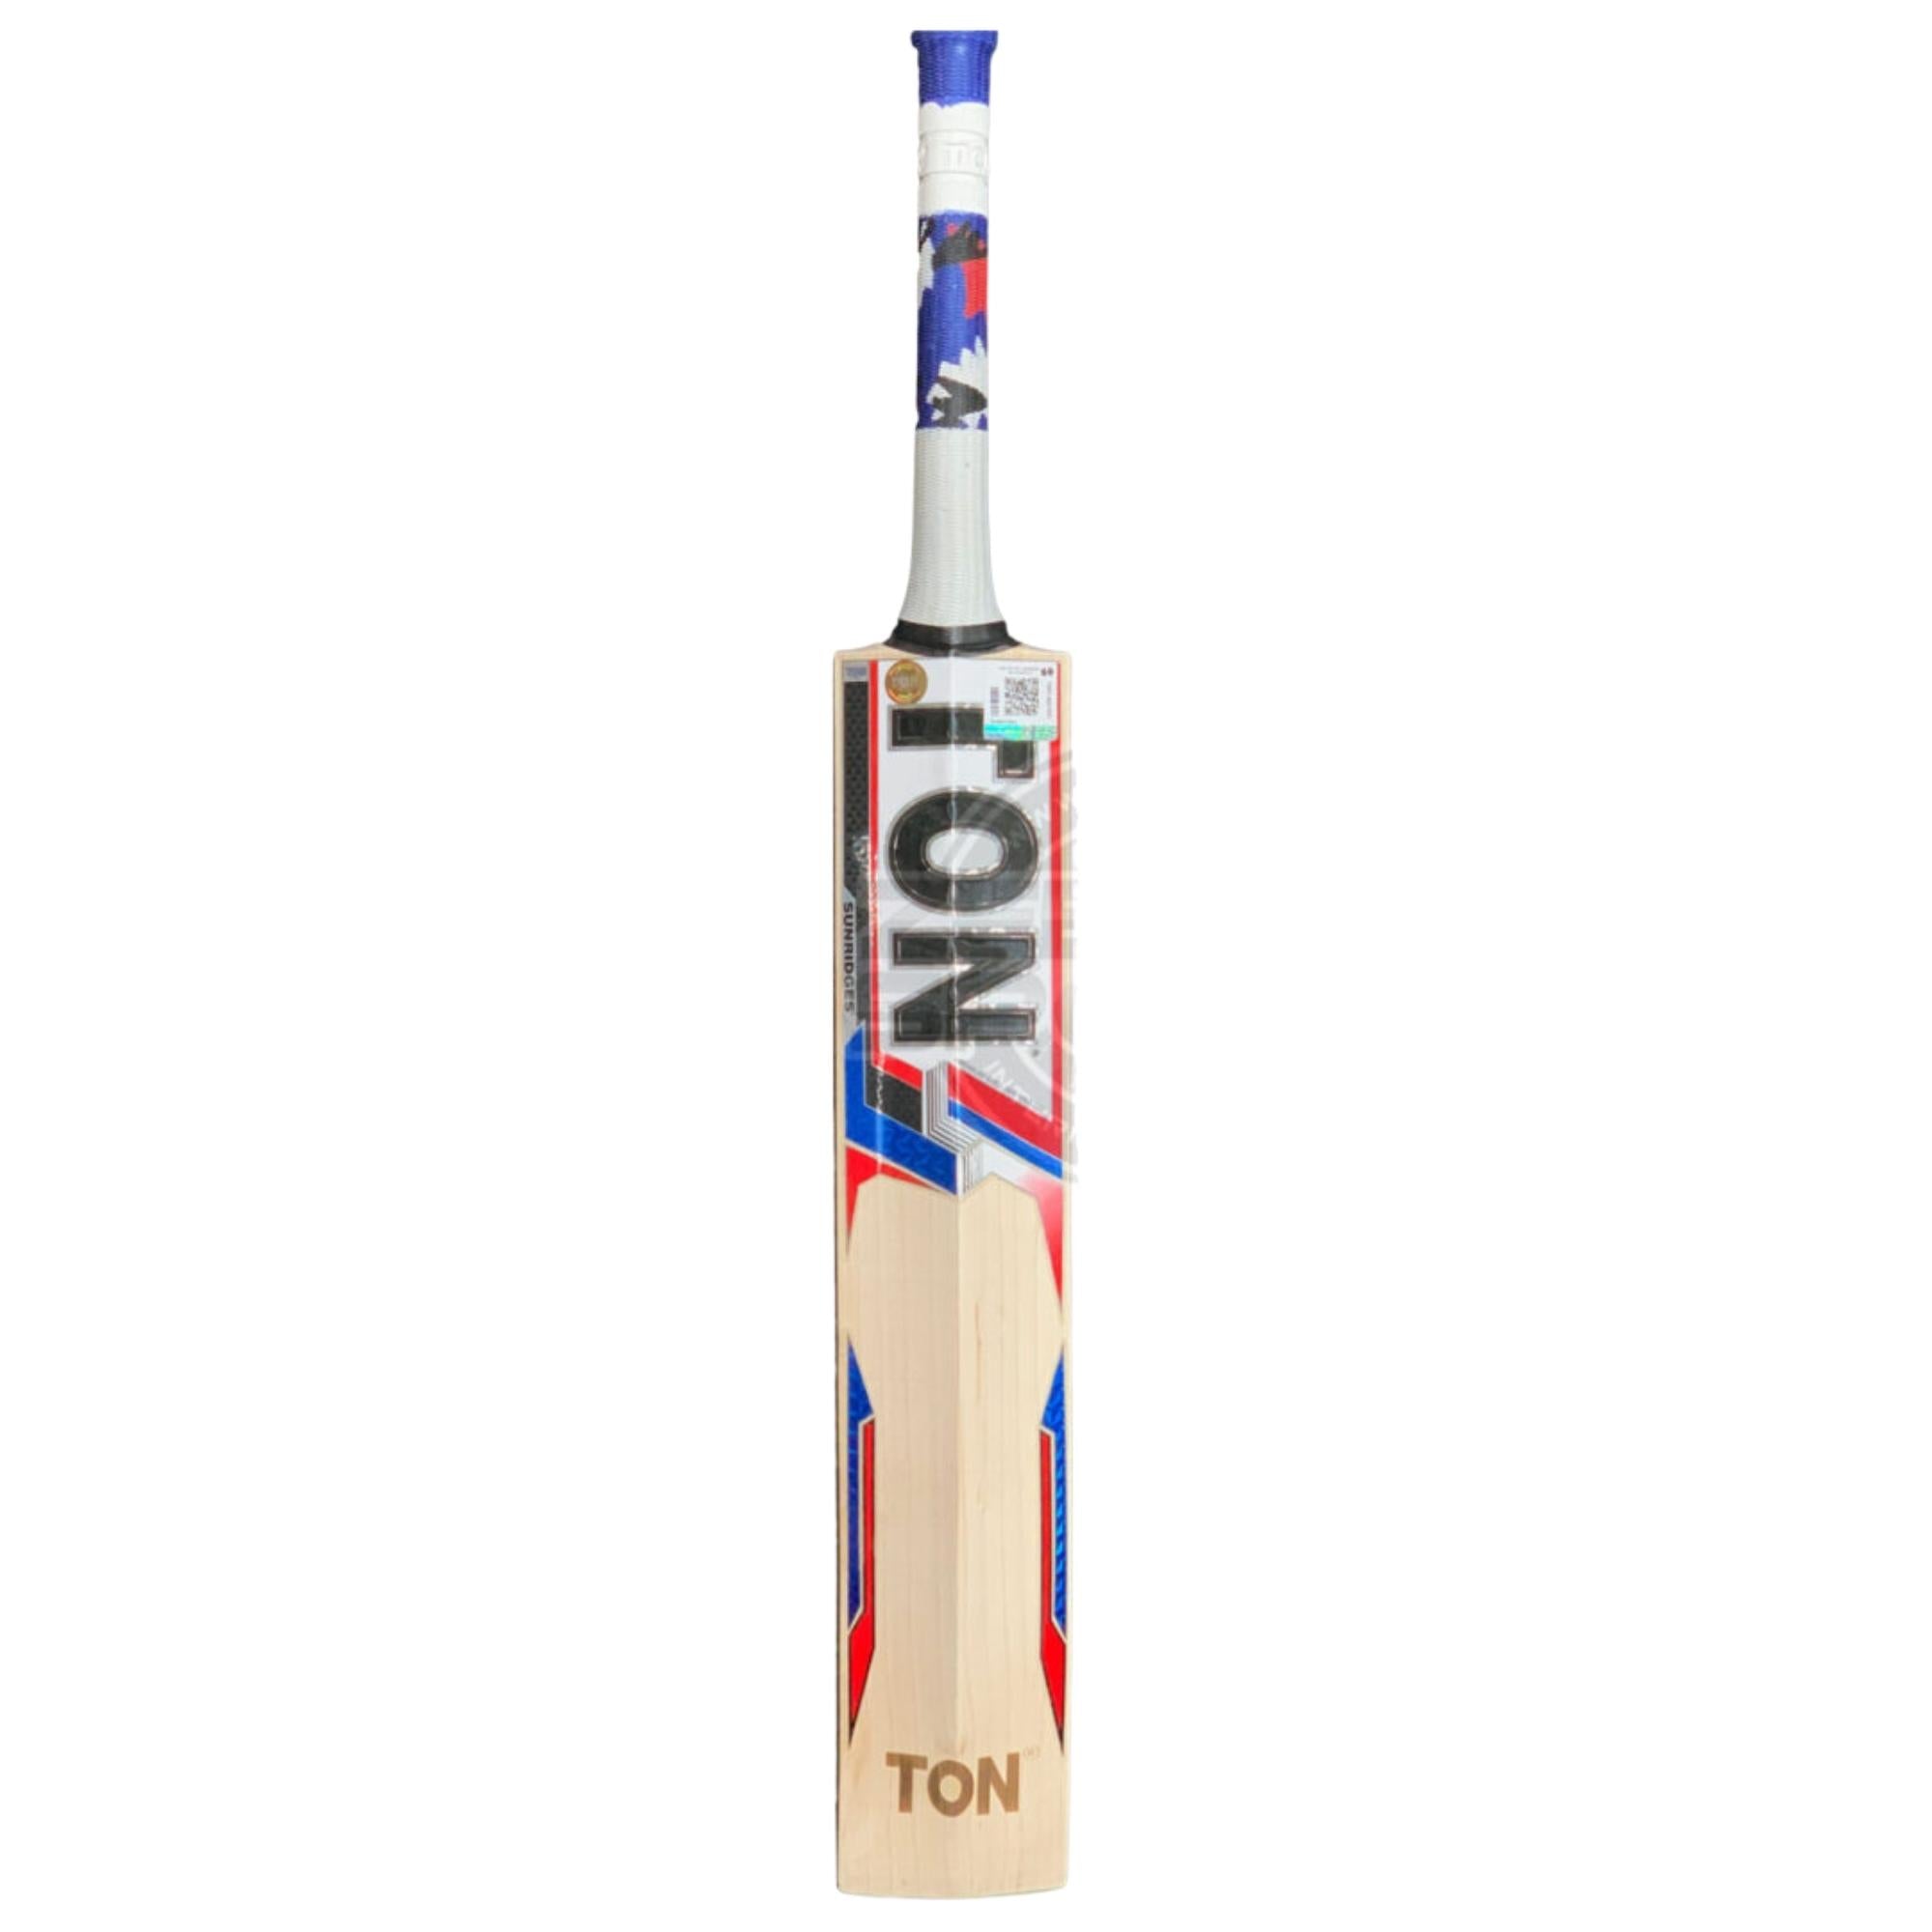 SS Ton Sunridges Reserve Premium Cricket Bat